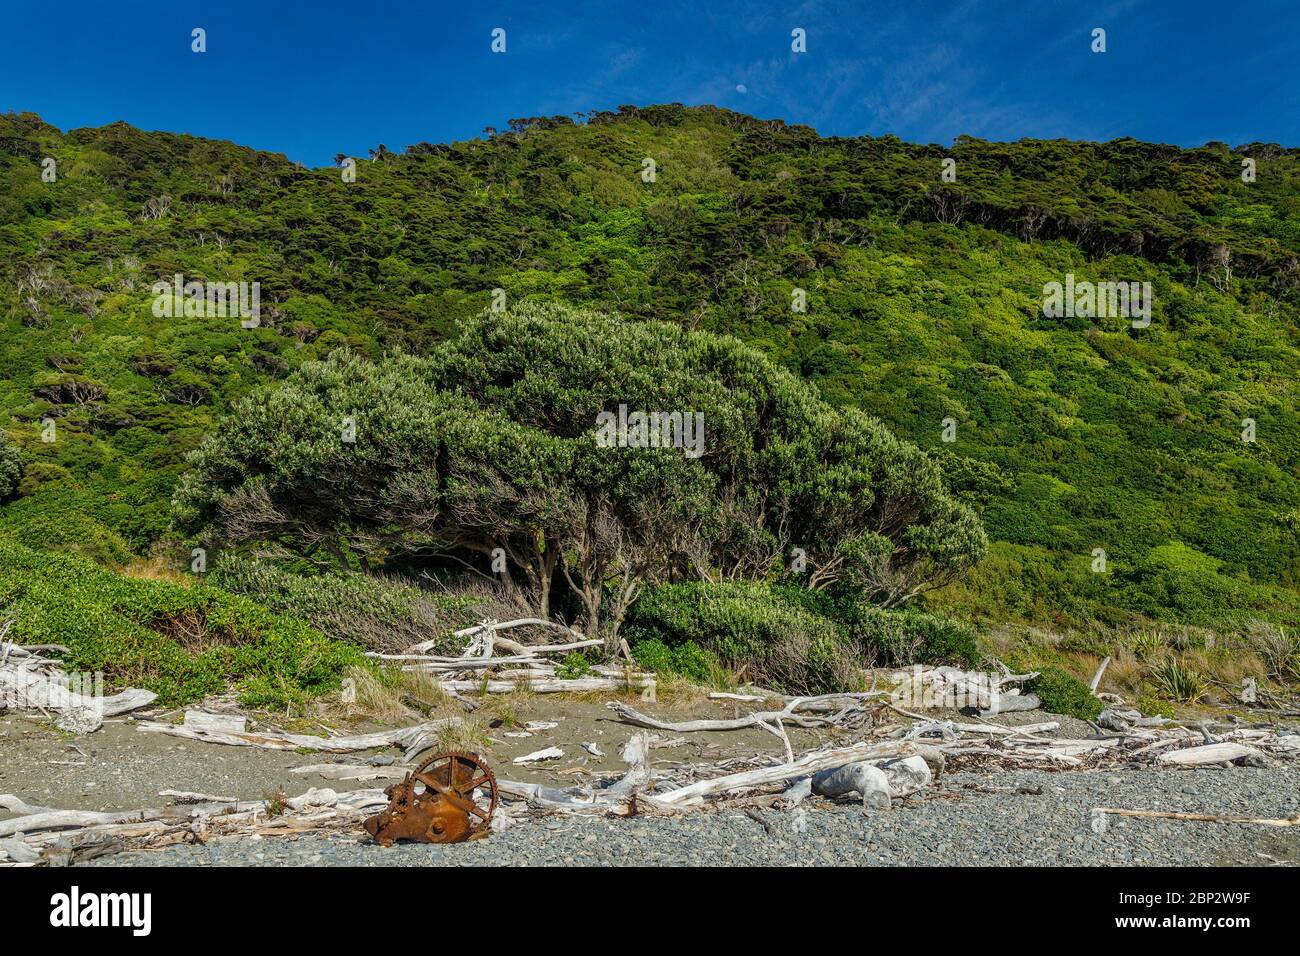 The beach on Kapiti Island, New Zealand. Strewn with driftwood. The island is a carefully managed bird and wildlife sanctuary. Stock Photo